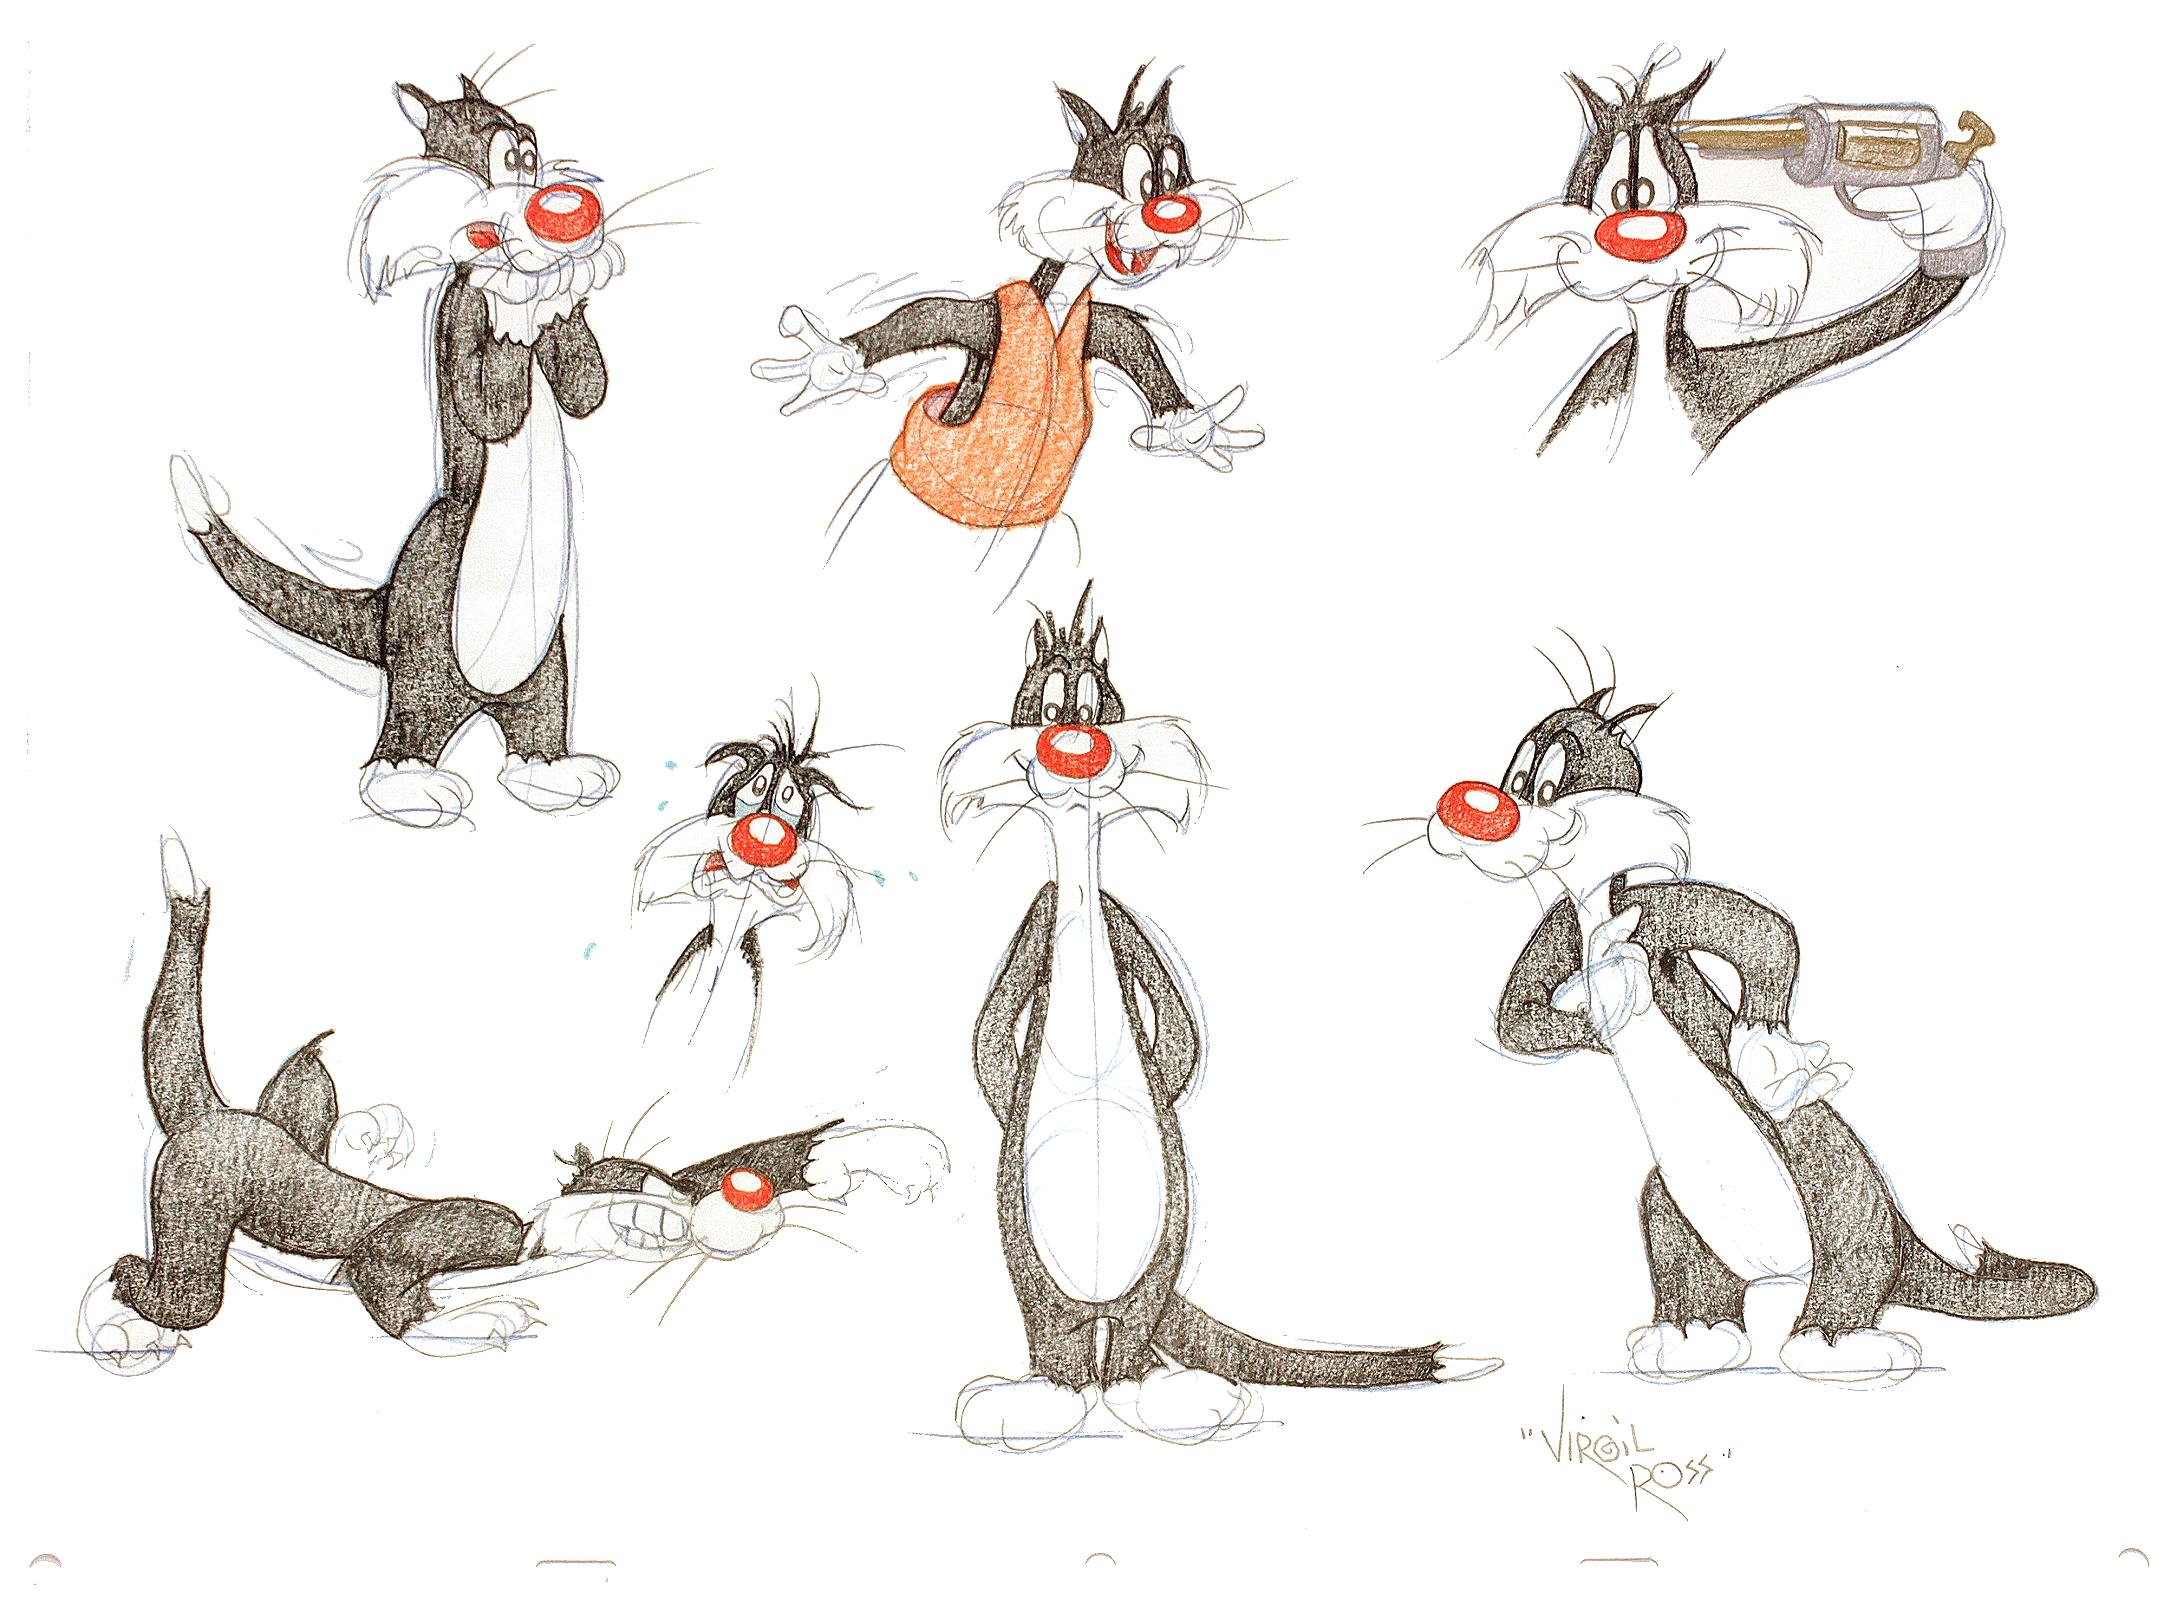 ARTIST: Virgil Ross. 

TITLE: Sylvester The Cat. (Seven Original drawings).

PUBLISHER: Warner Brothers Studios, (c.1990's)

DESCRIPTION: SEVEN ORIGINAL DRAWINGS OF SILVESTER THE CAT. 17